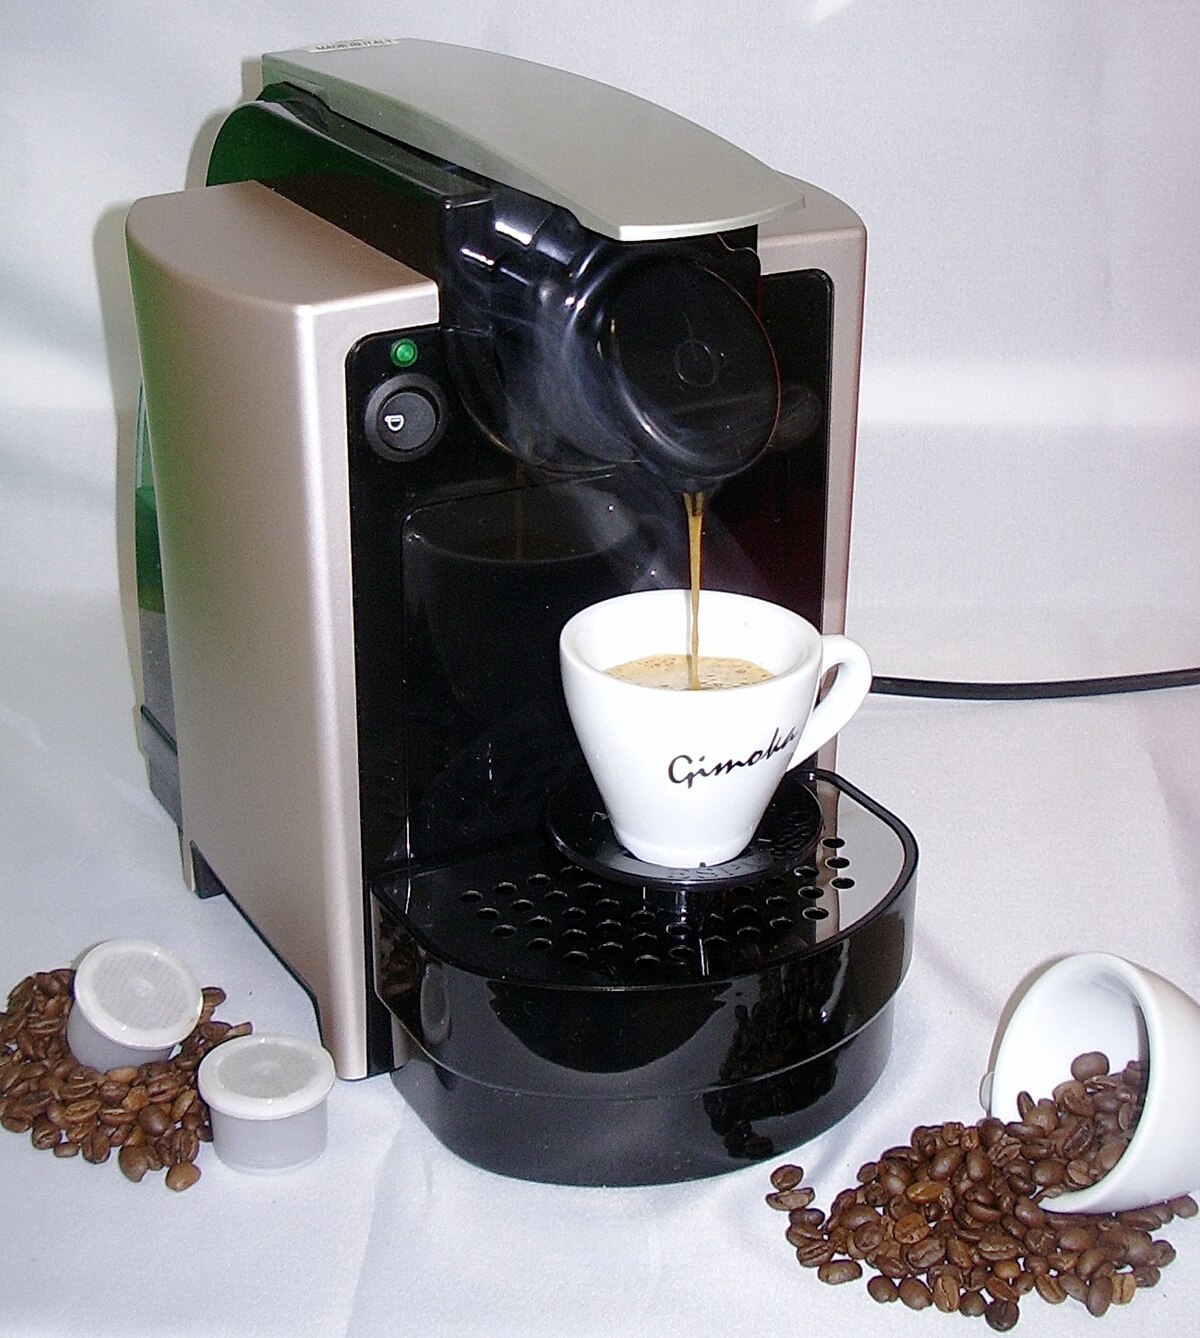 File:Krups Vivo F880 home espresso maker.jpg - Wikipedia